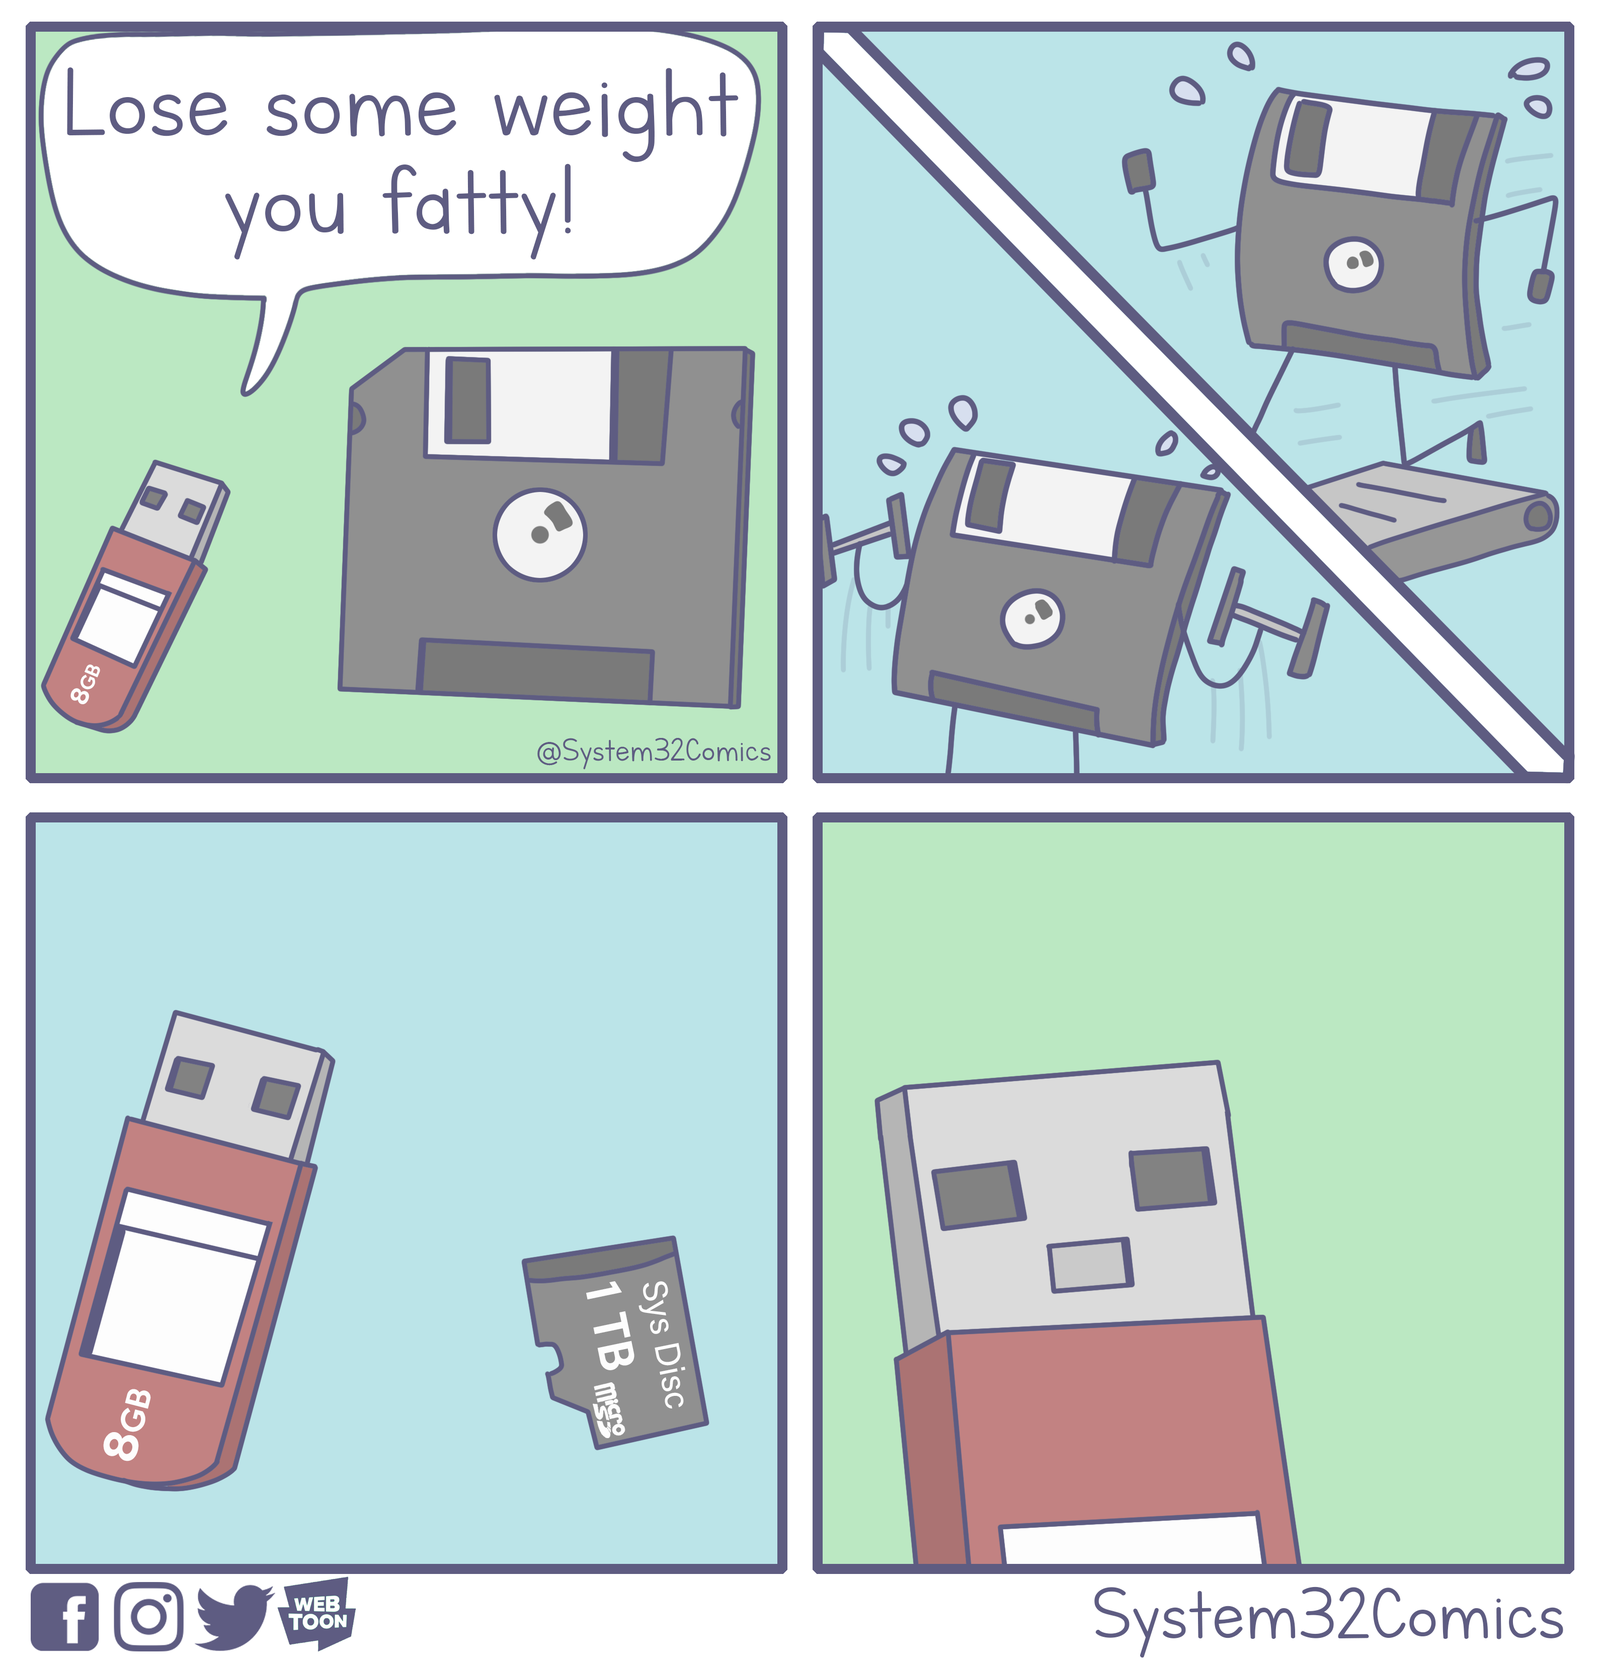 Lose weight, fat man! - Comics, Diskette, Flash drives, Reddit, Slimming, System32comics